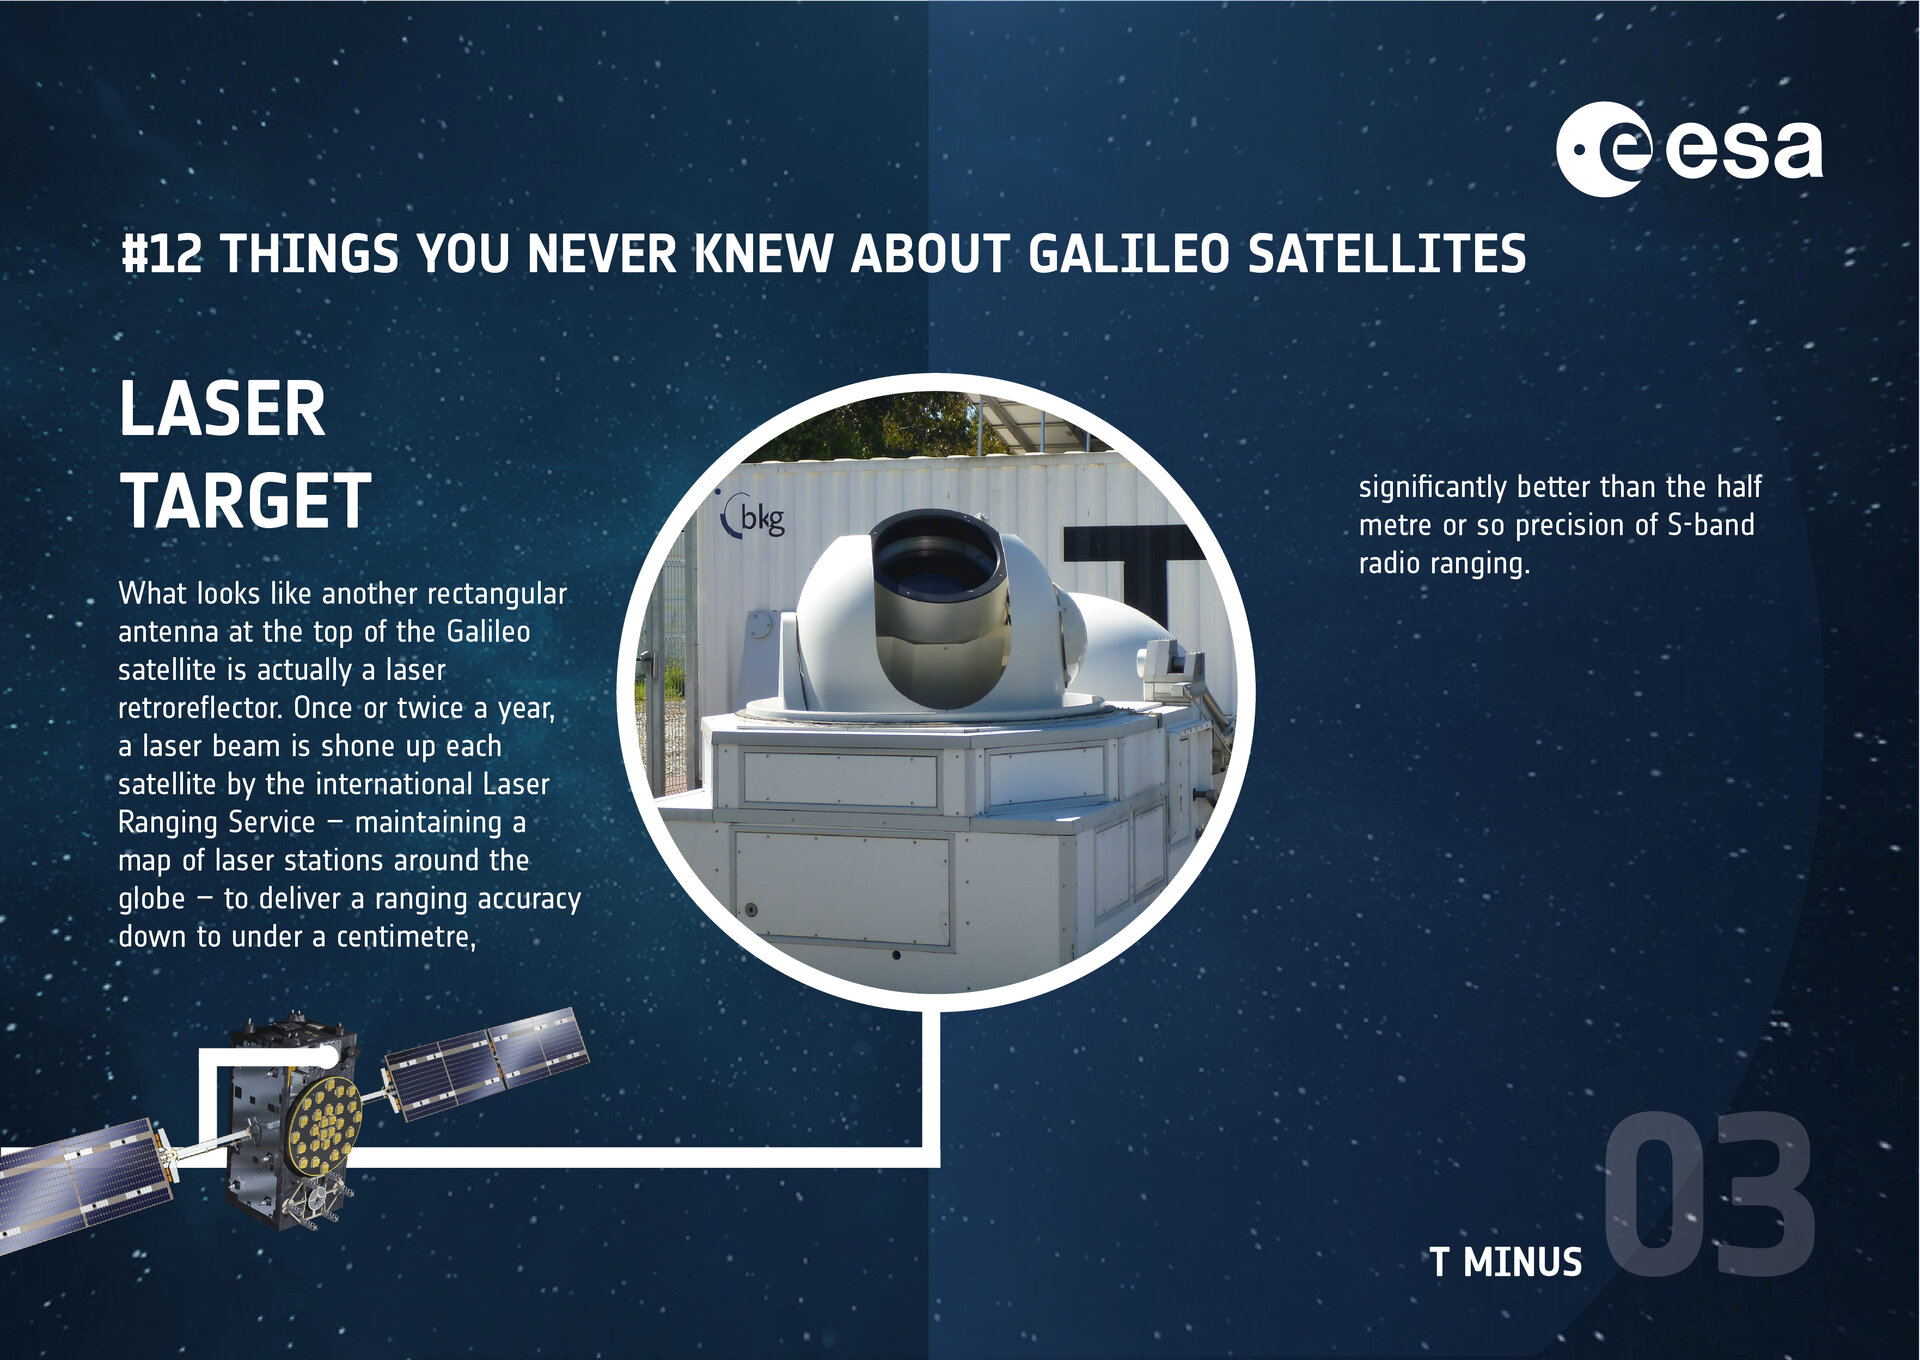 Galileo infographic: 'Laser target'